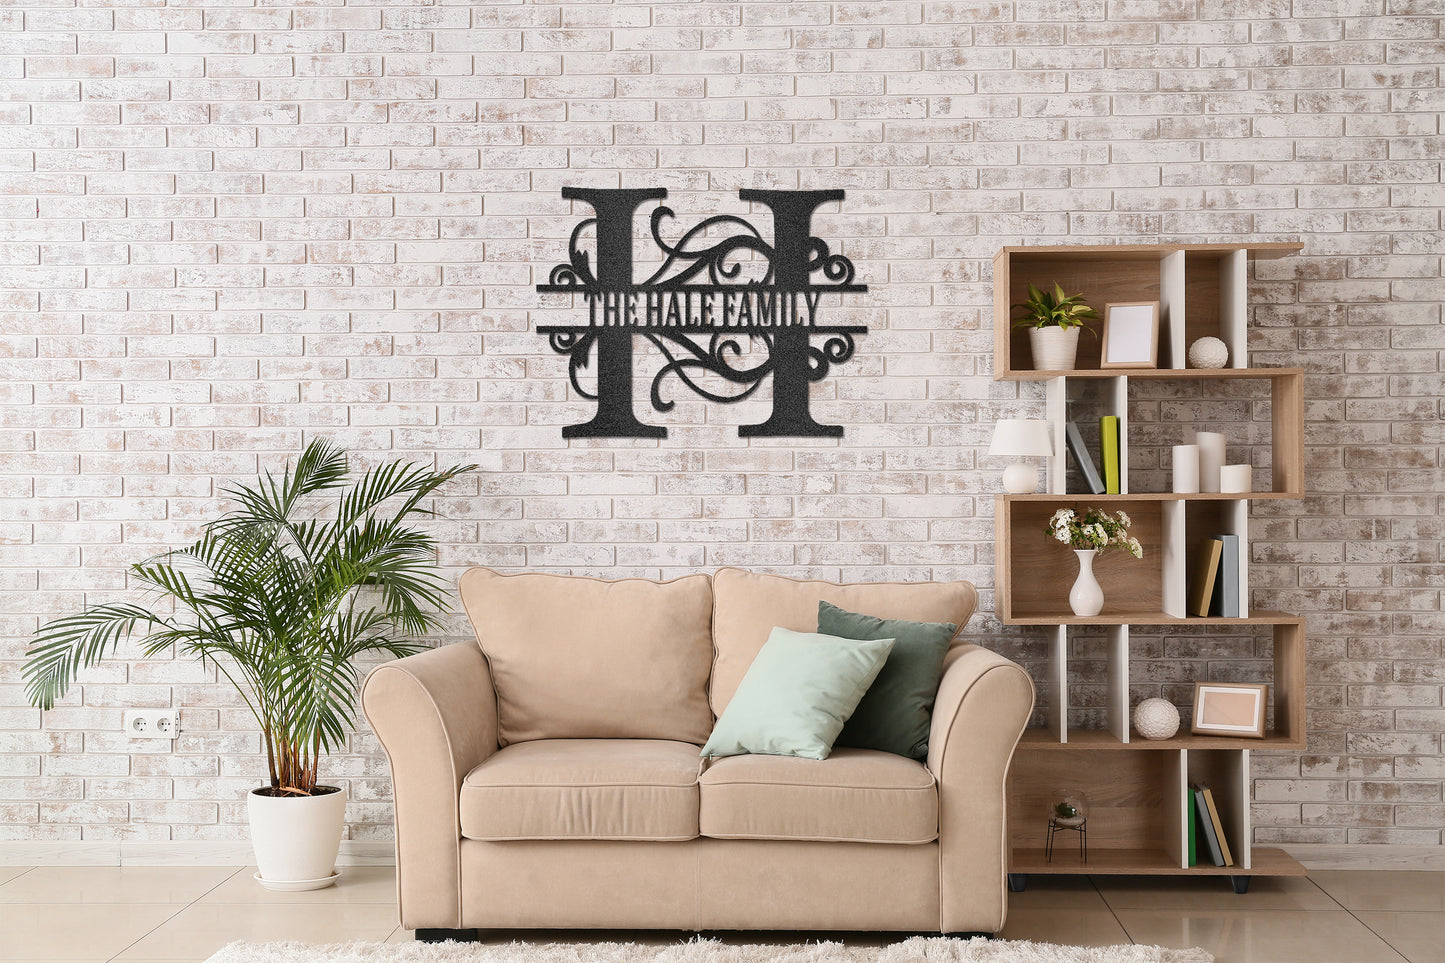 FAMILY NAME SPLIT MONOGRAM | Personalized Metal Wall Art Sign